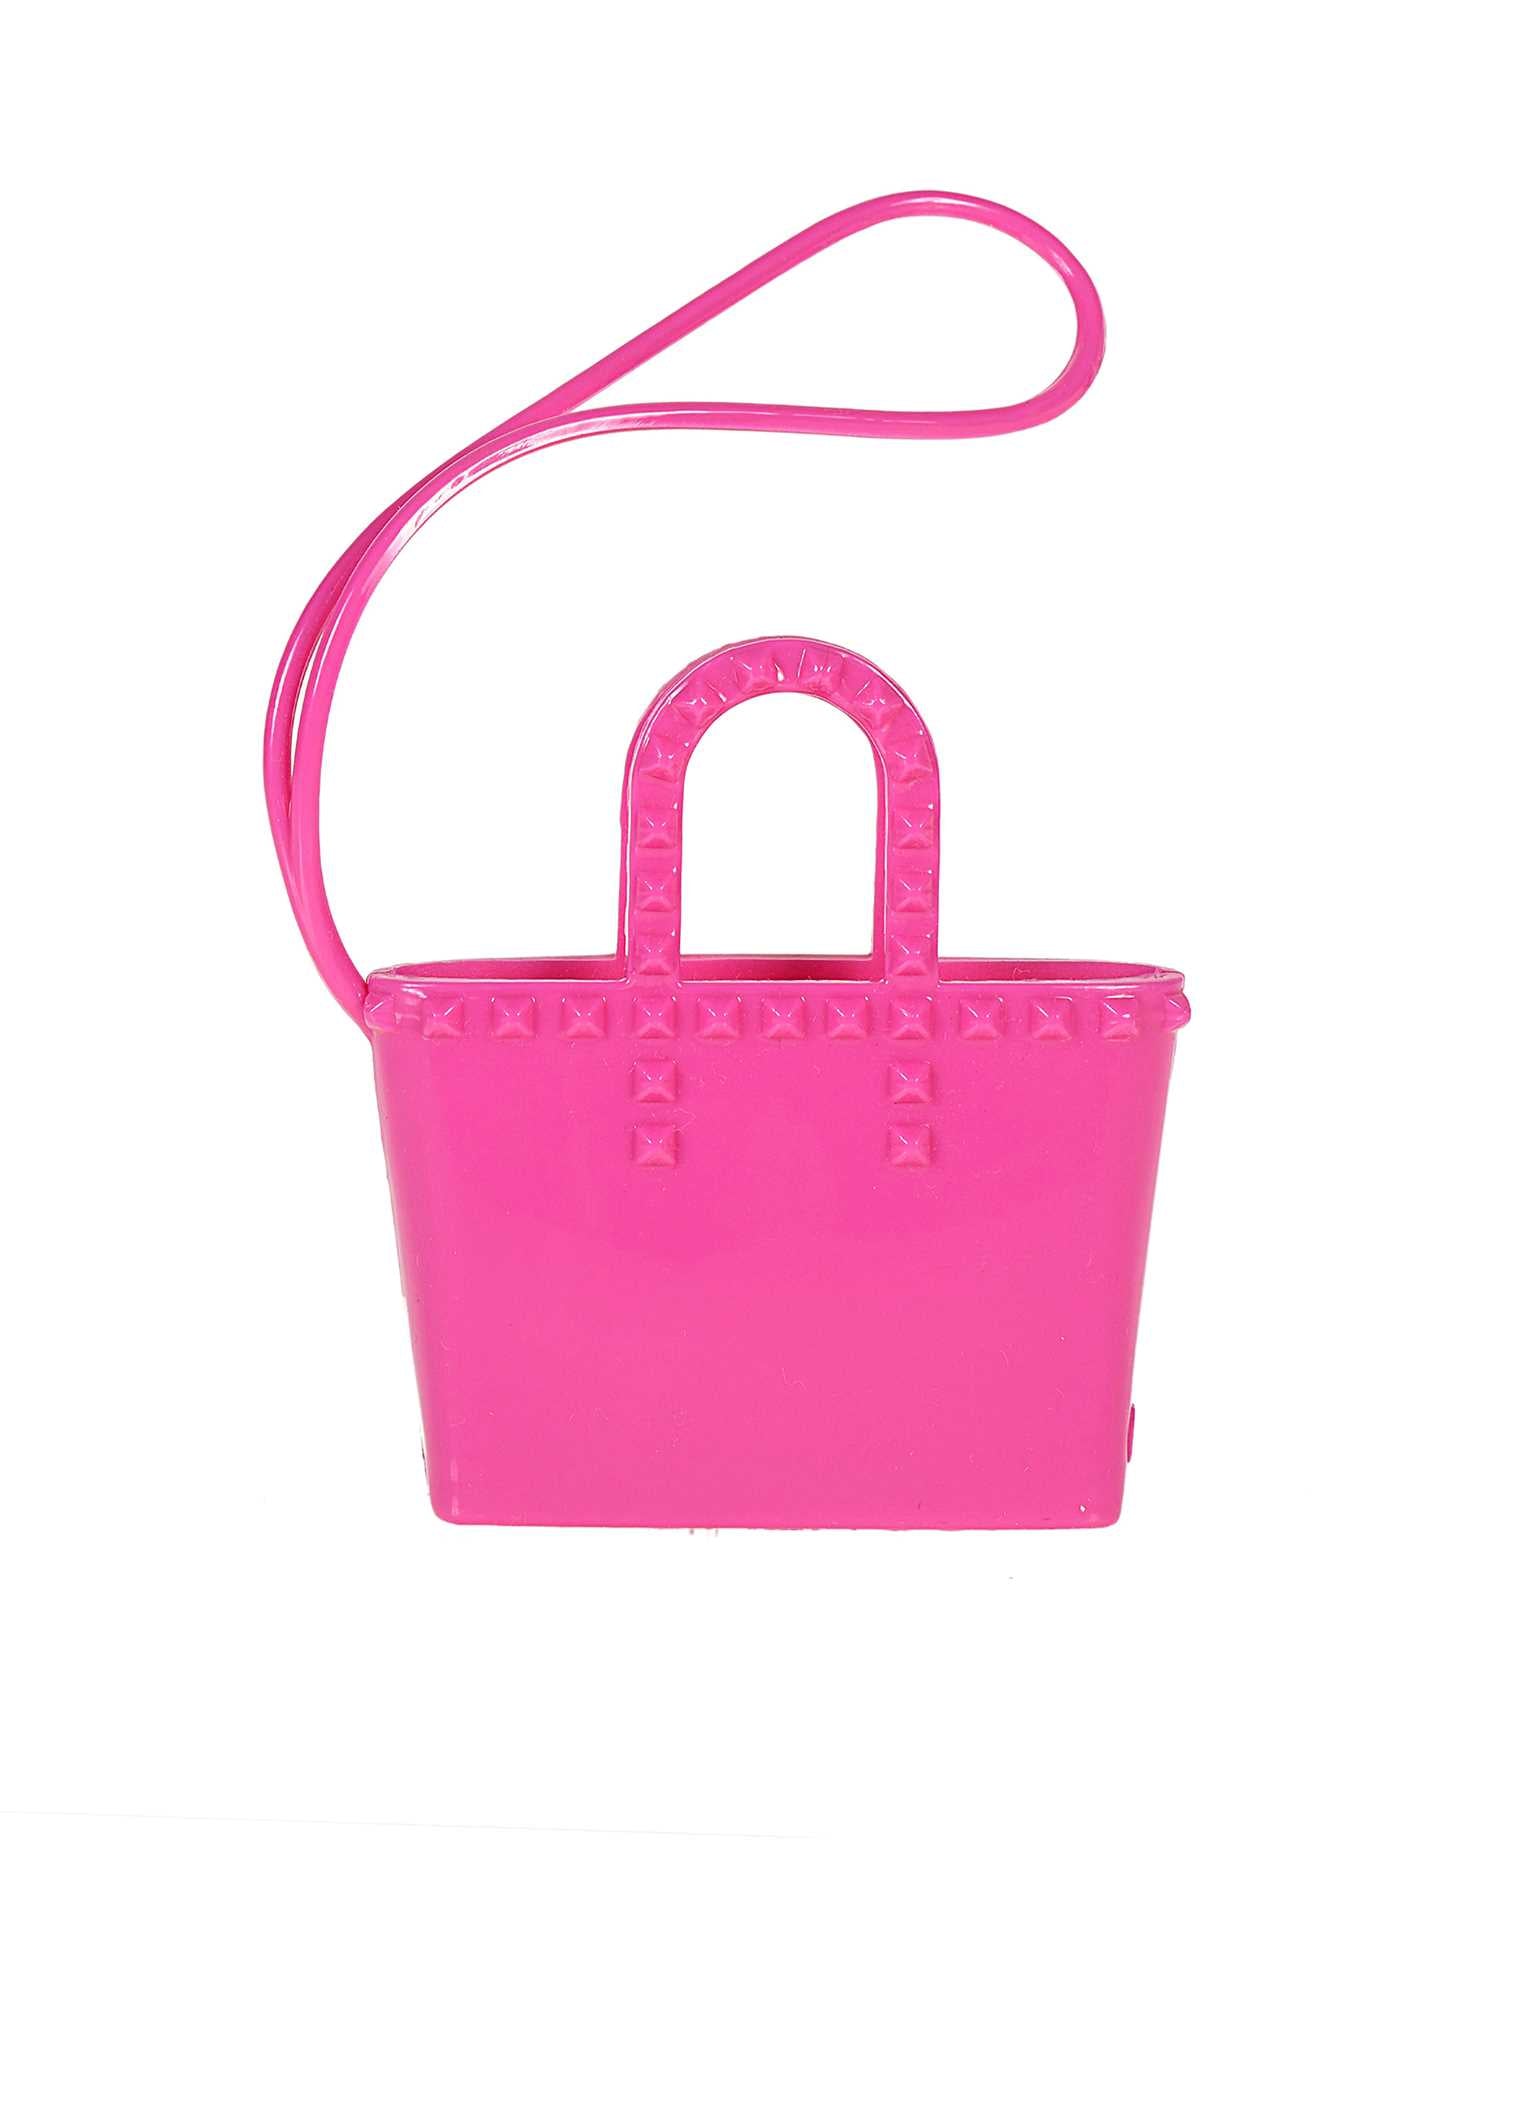 Buy DWJSu Love Handbag Shopping Bag Charm Girls Hobby Travel Beads